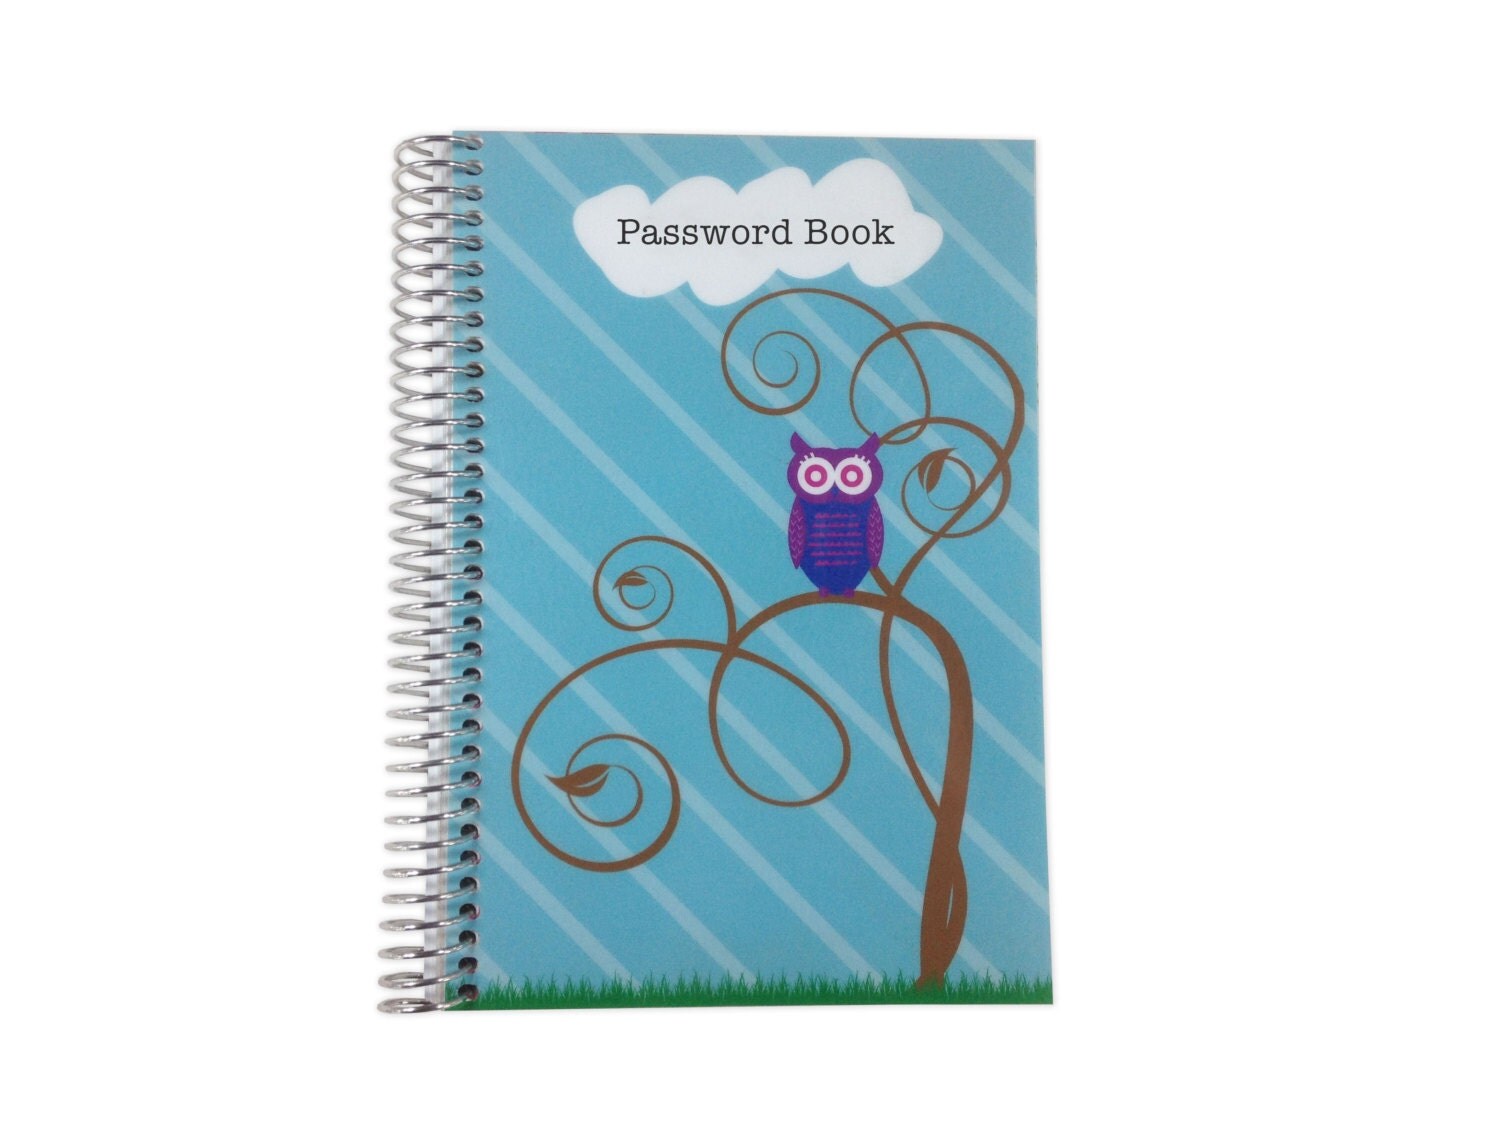 aeroadmin password book